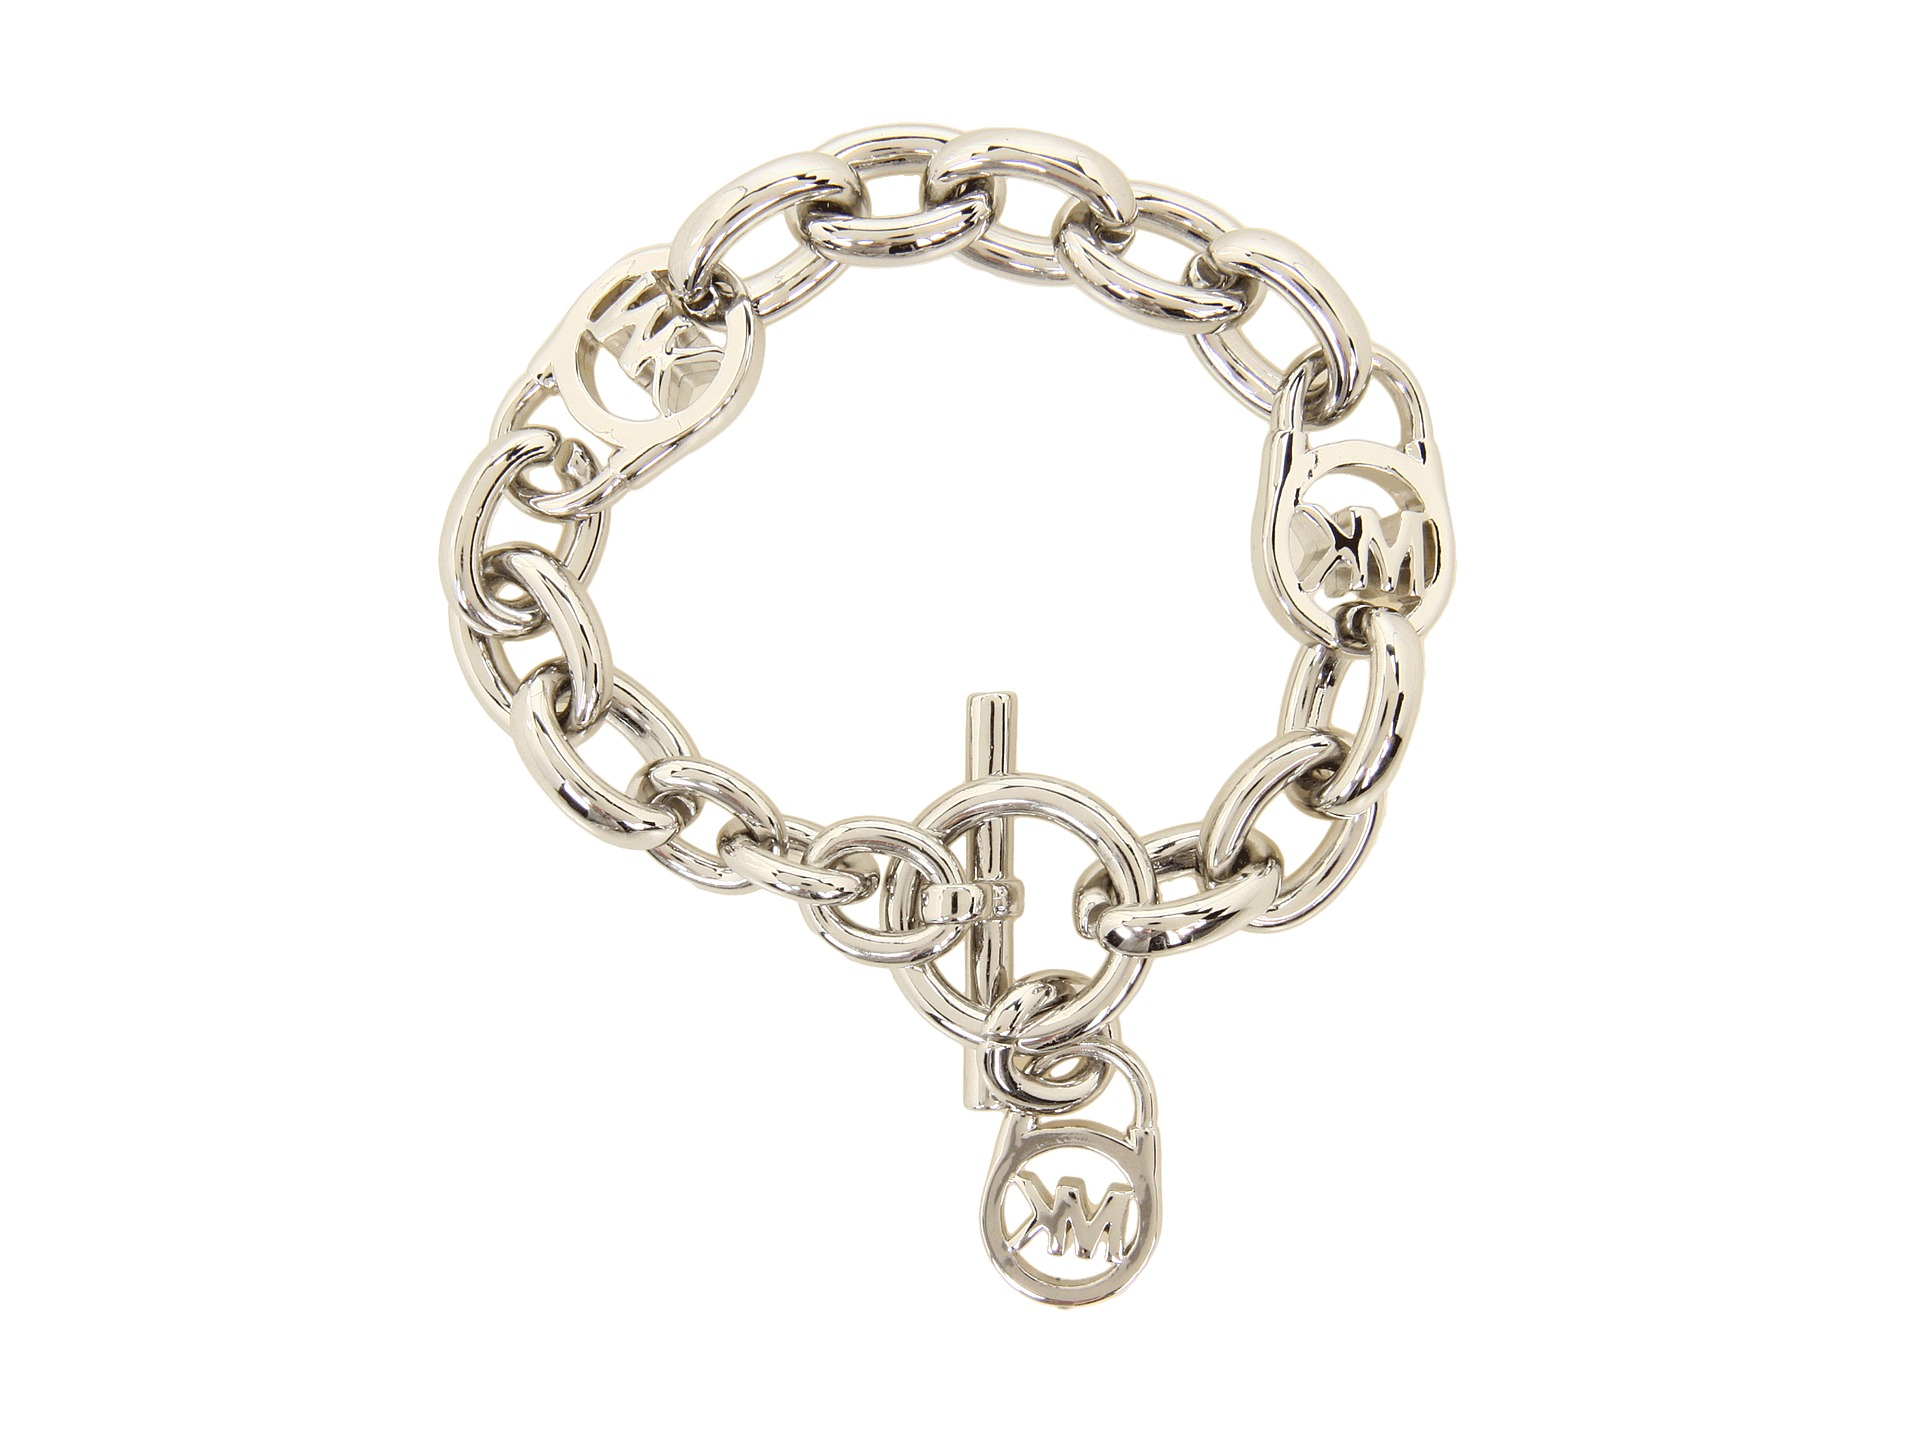 michael kors padlock bracelet silver